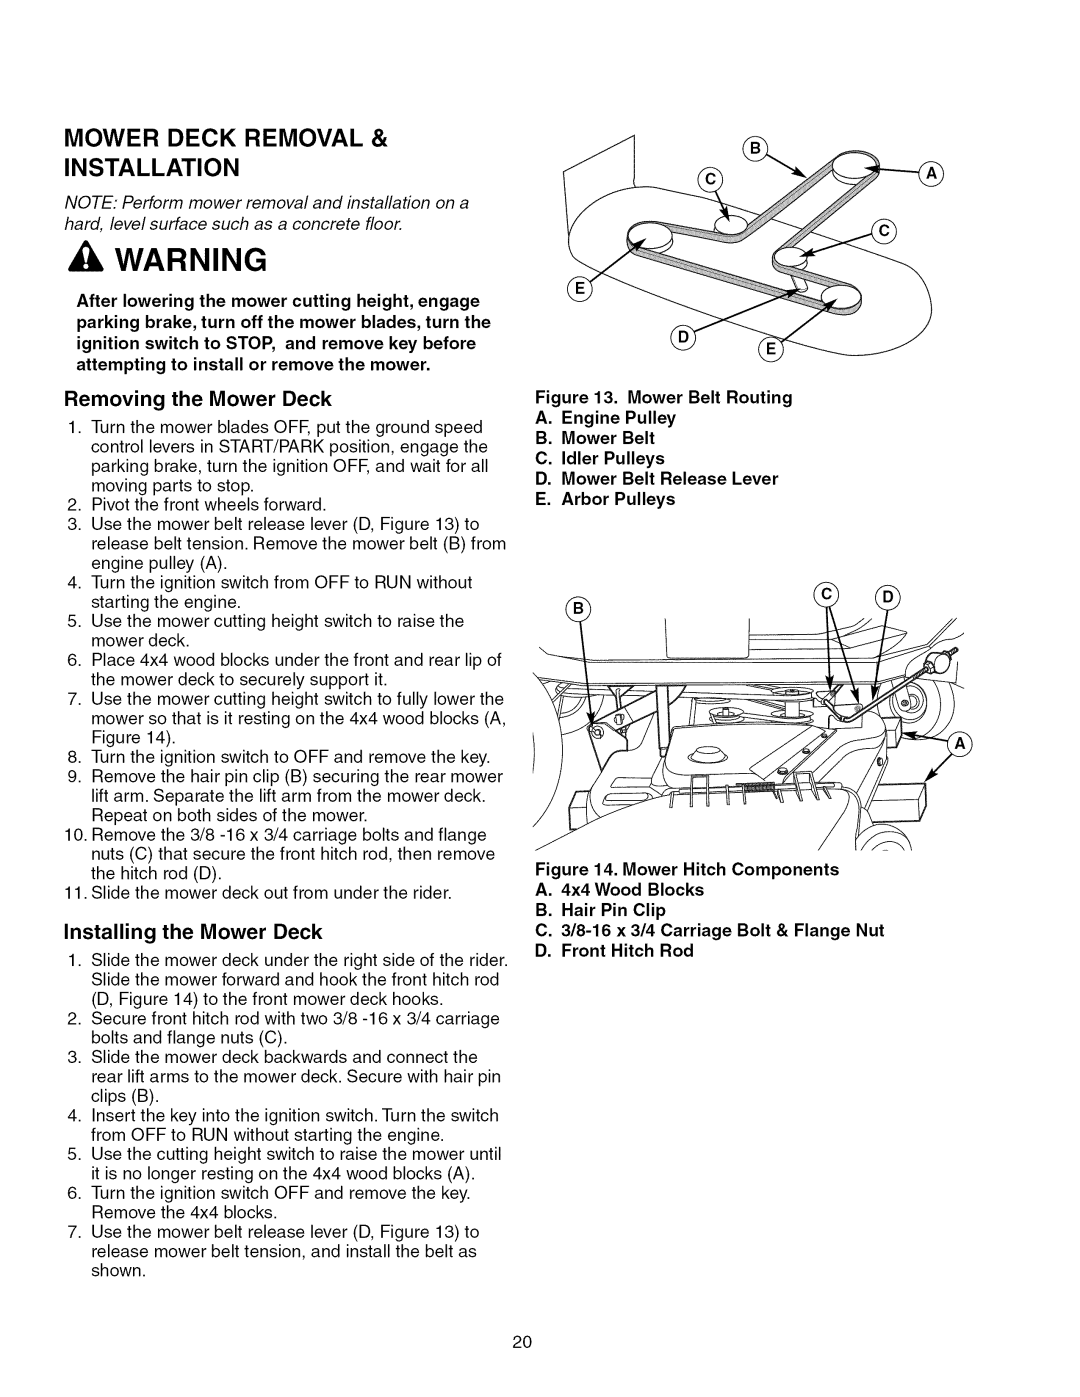 Craftsman 28986 Mower Deck Removal & Installation, Removing the Mower Deck, Installing the Mower Deck, D.Front Hitch Rod 